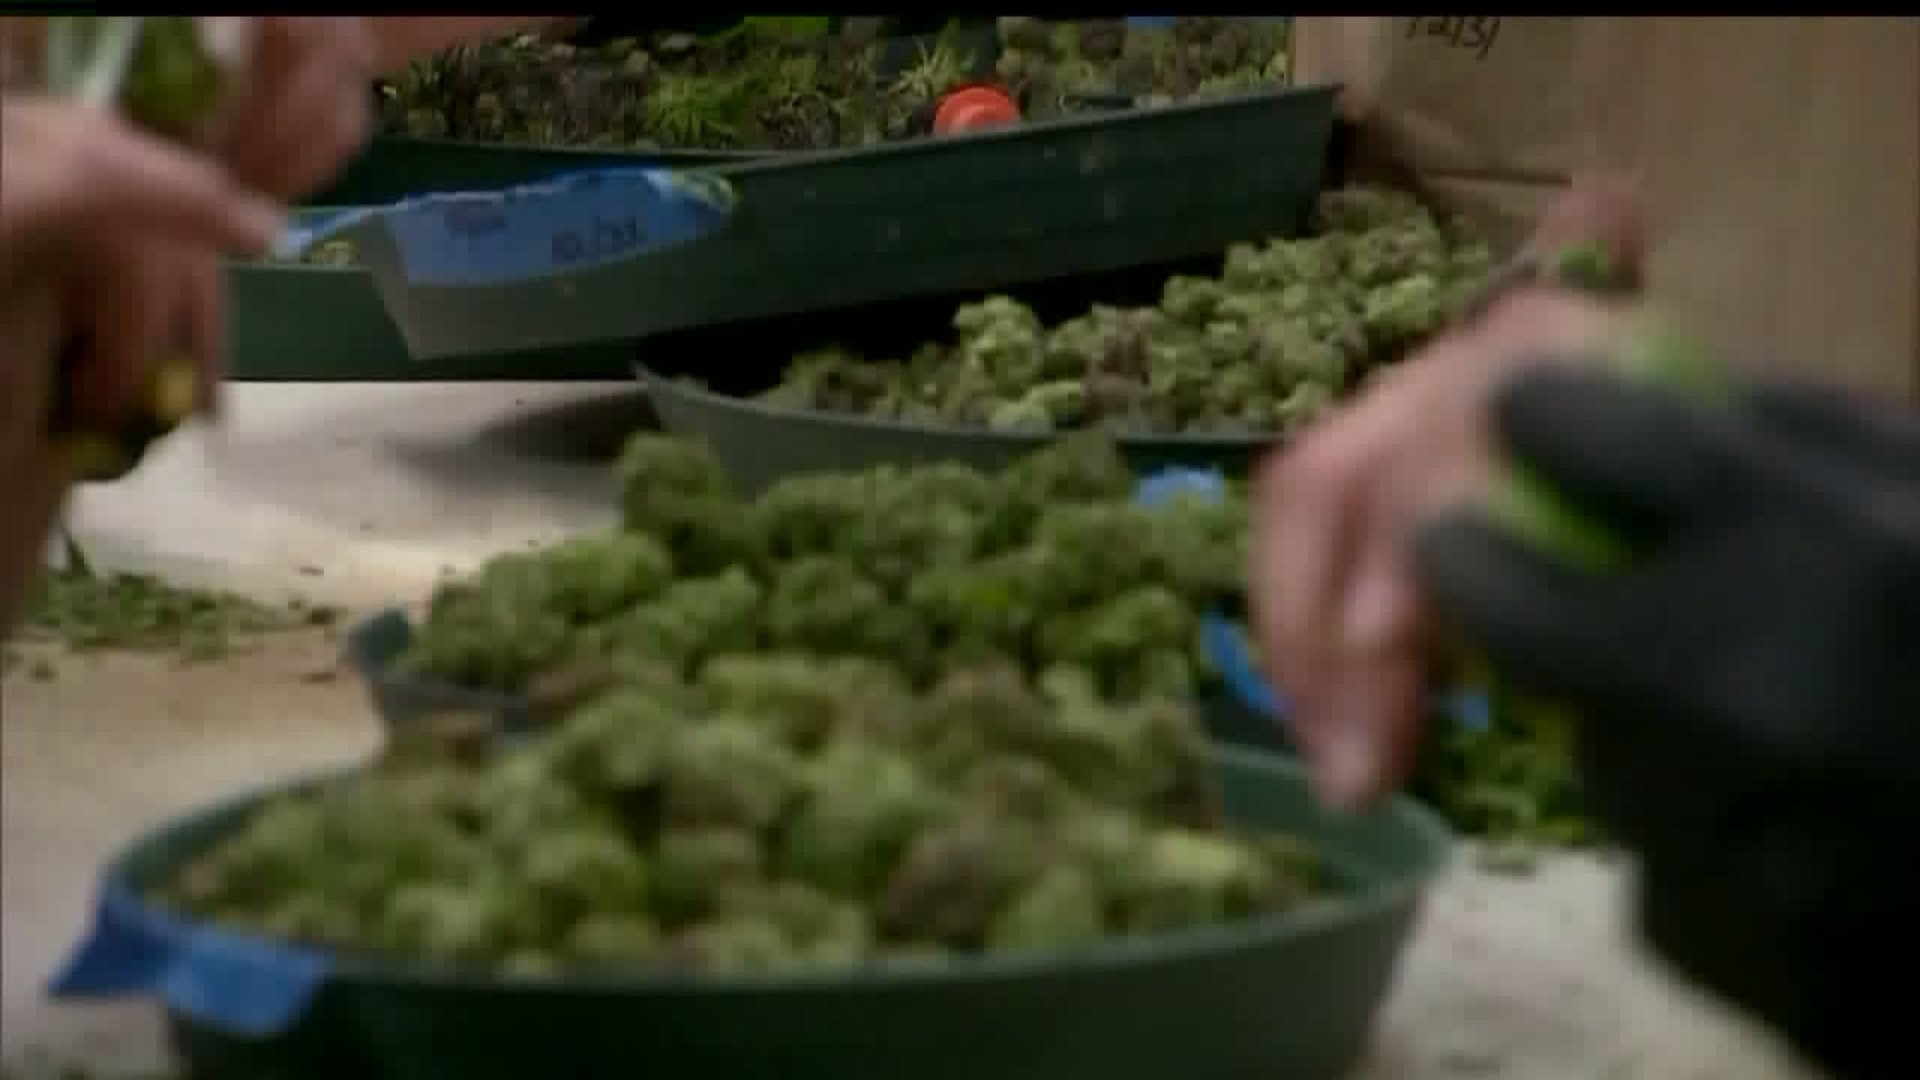 Bill proposes legalizing adult-use recreational marijuana